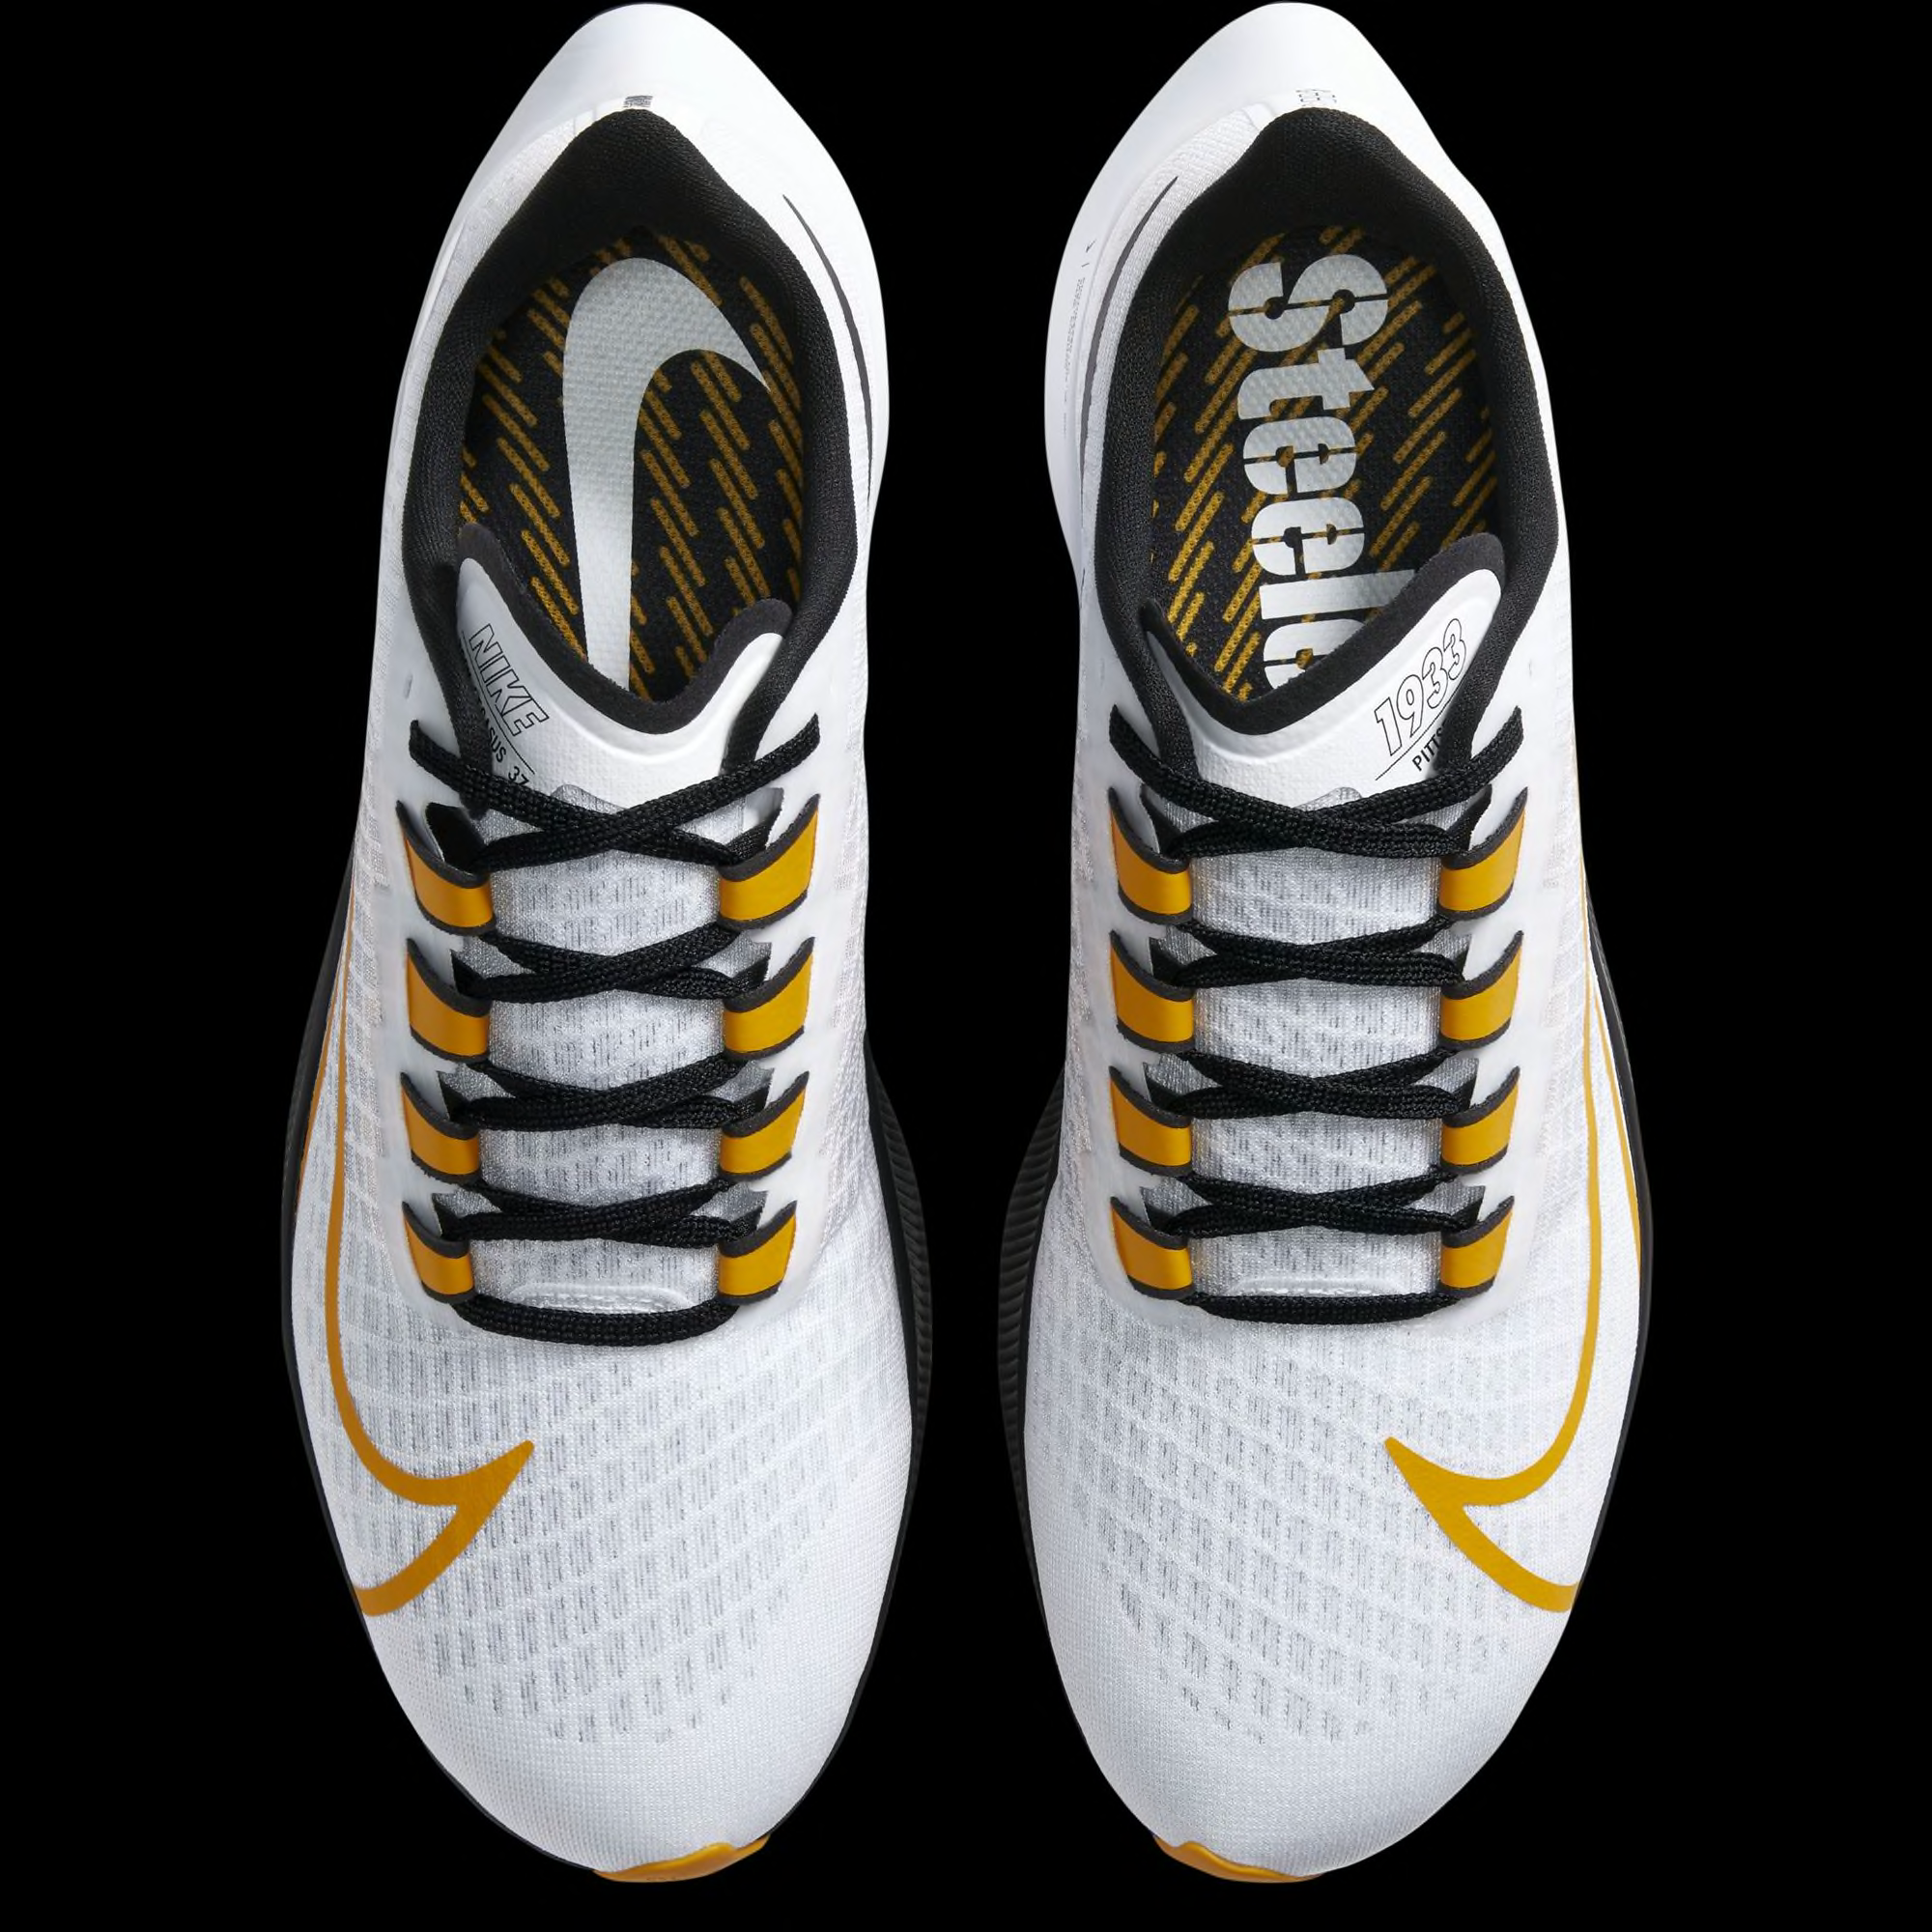 Pittsburgh Steelers Nike shoes 